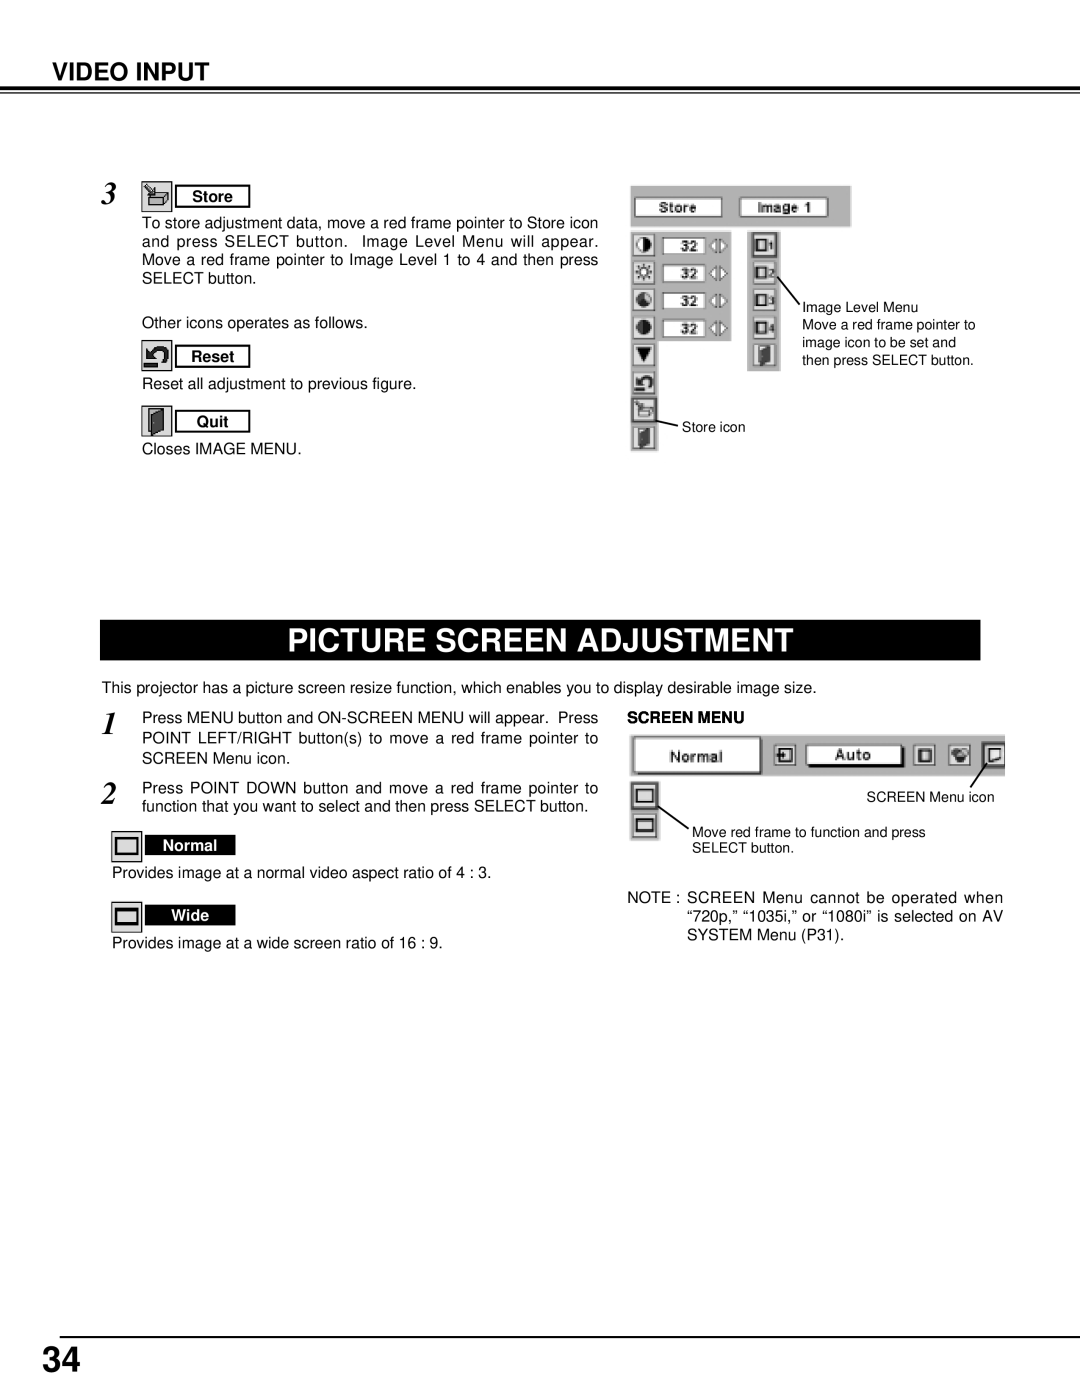 BOXLIGHT MP-42T manual Picture Screen Adjustment, Video Input, Store, Reset, Quit, Screen Menu 